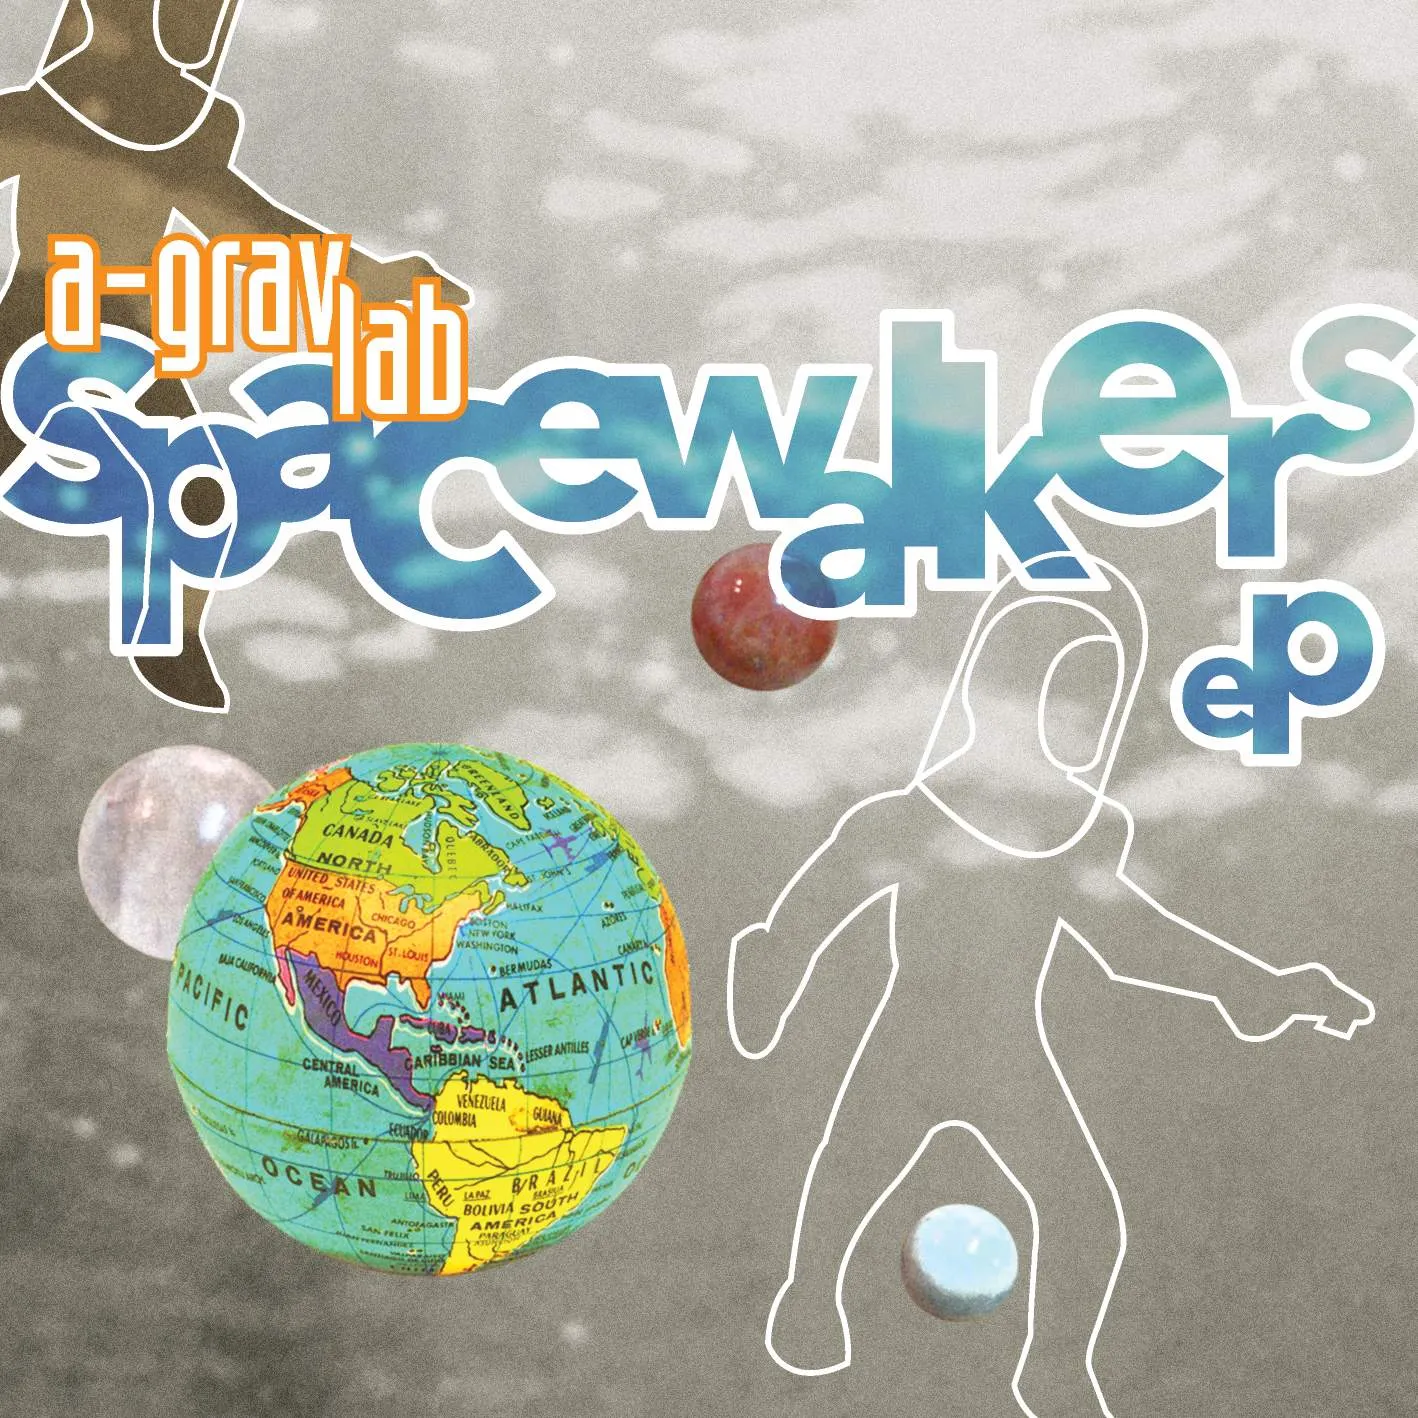 A-Grav Lab - Spacewalkers EP